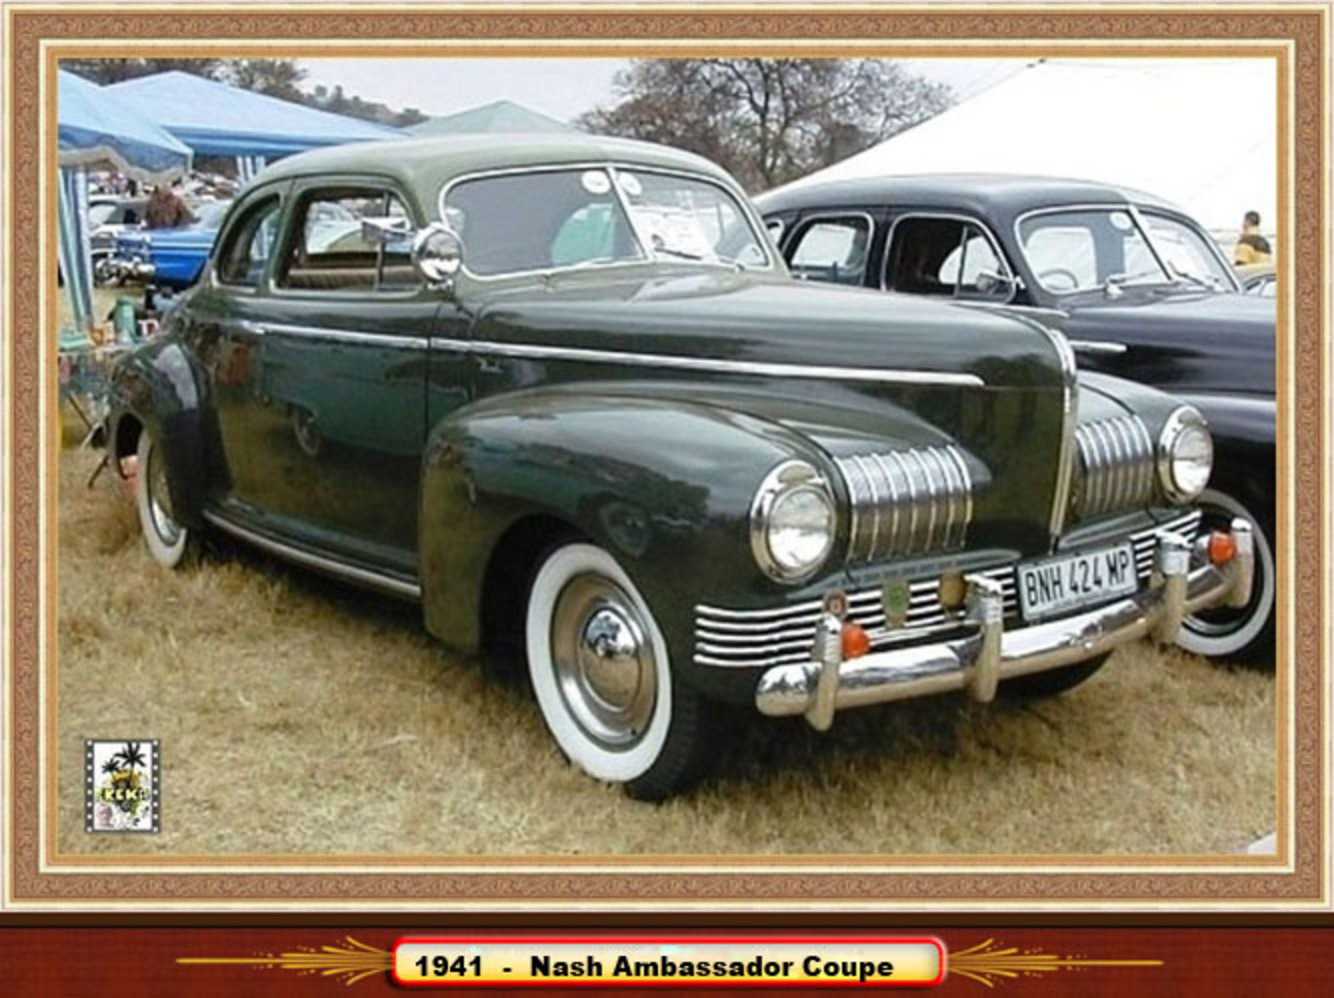 1941 - Nash Ambassador Coupe | Flickr - Photo Sharing!